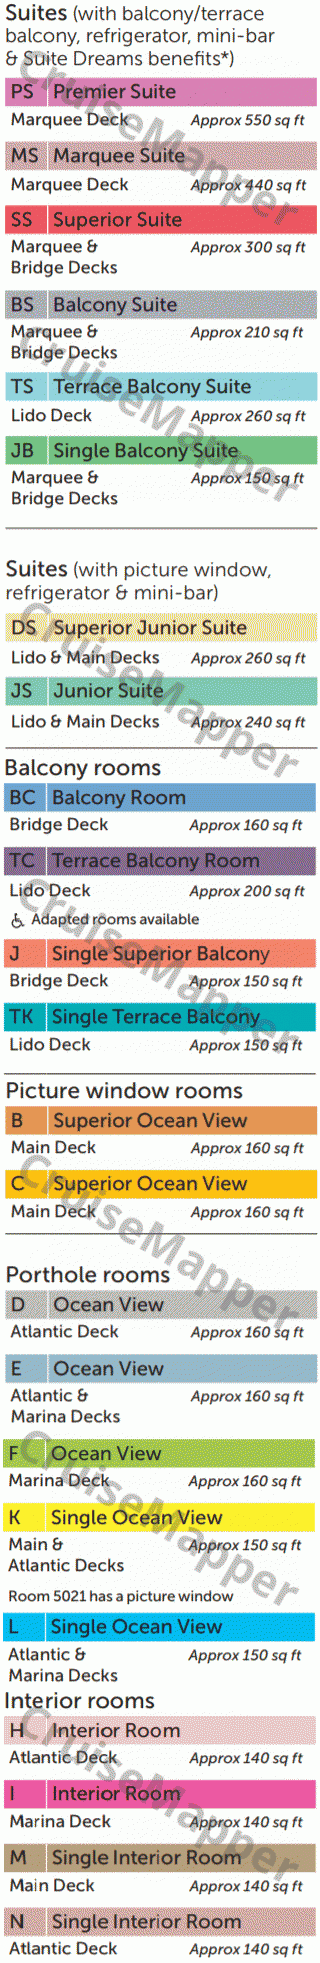 Black Watch deck 4 plan (Atlantic) legend